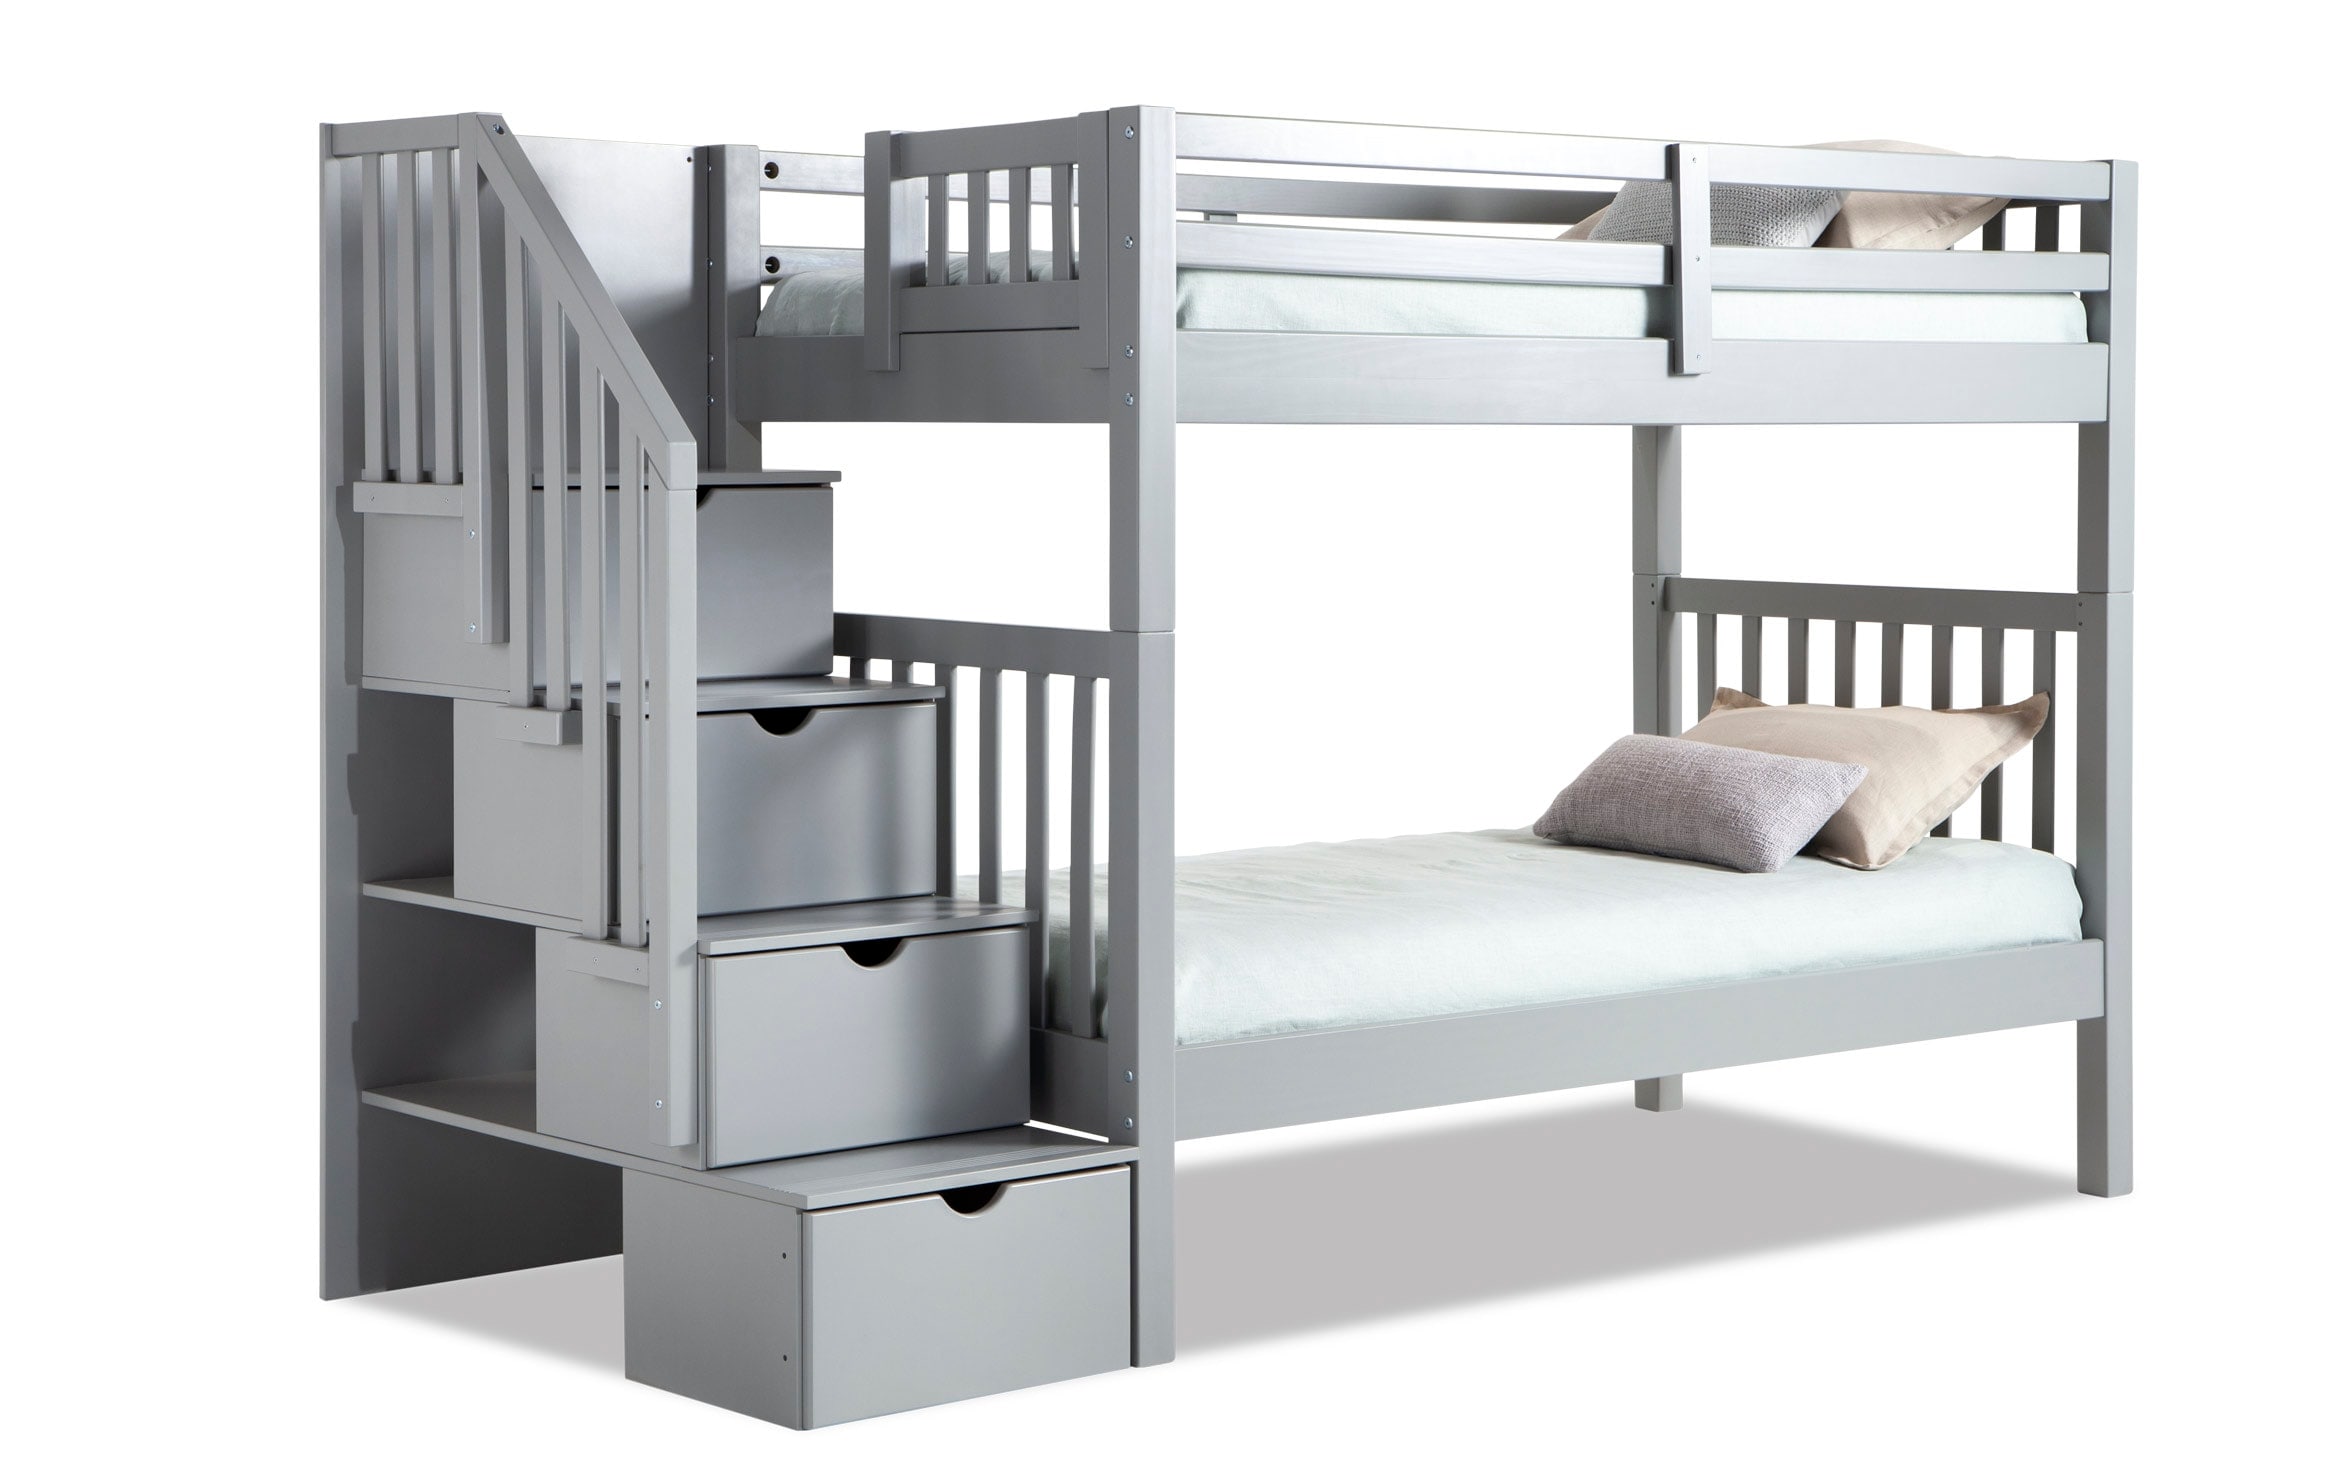 Keystone Twin Gray Stairway Bunk Bed, Bobs Furniture Keystone Bunk Bed